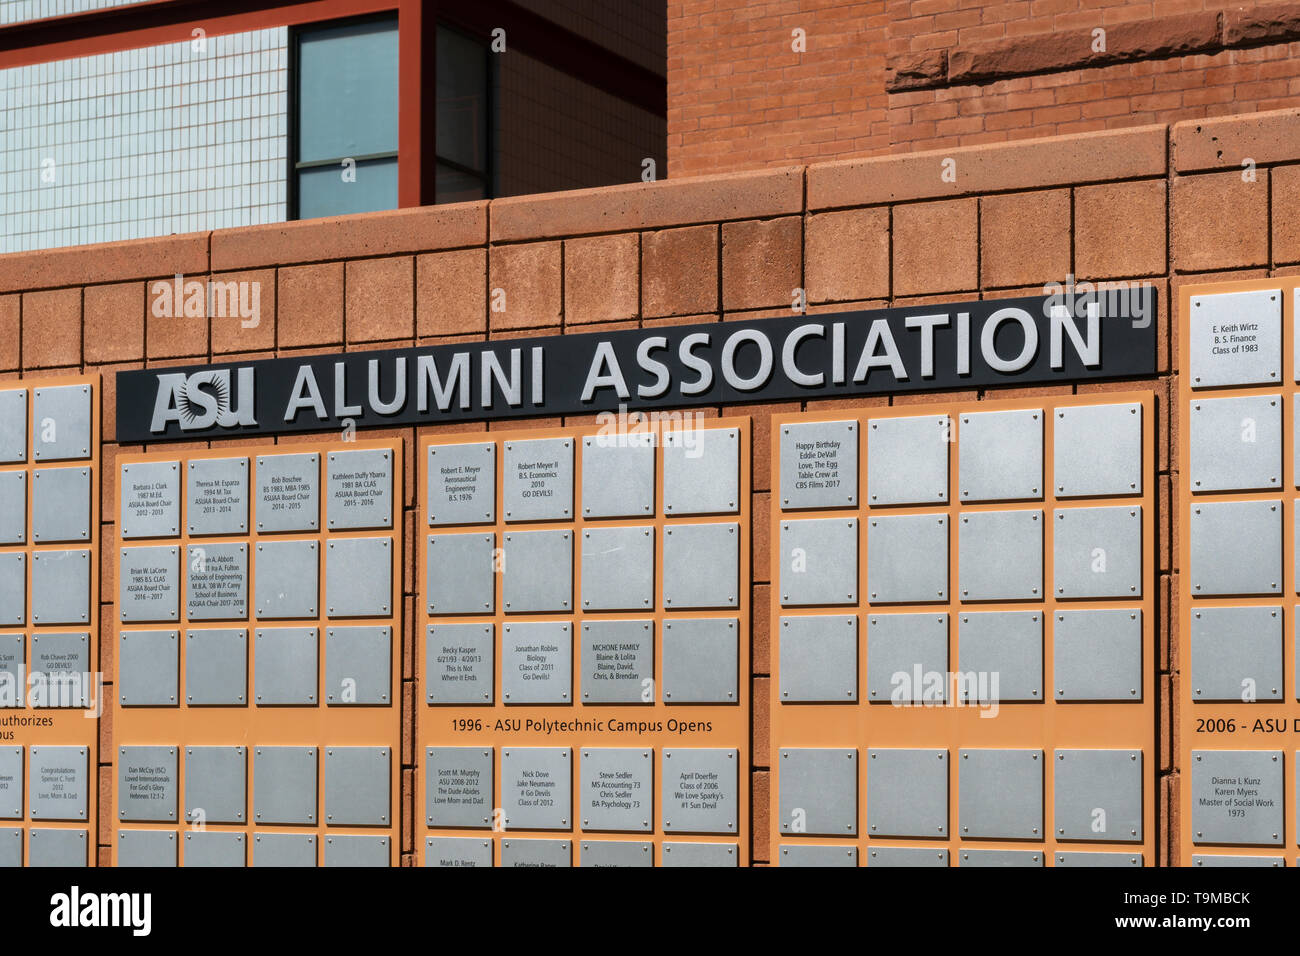 TEMPE, AZ/USA - 10. APRIL 2019: ASU-Alumni Association Wand auf dem Campus der Arizona State University. Stockfoto